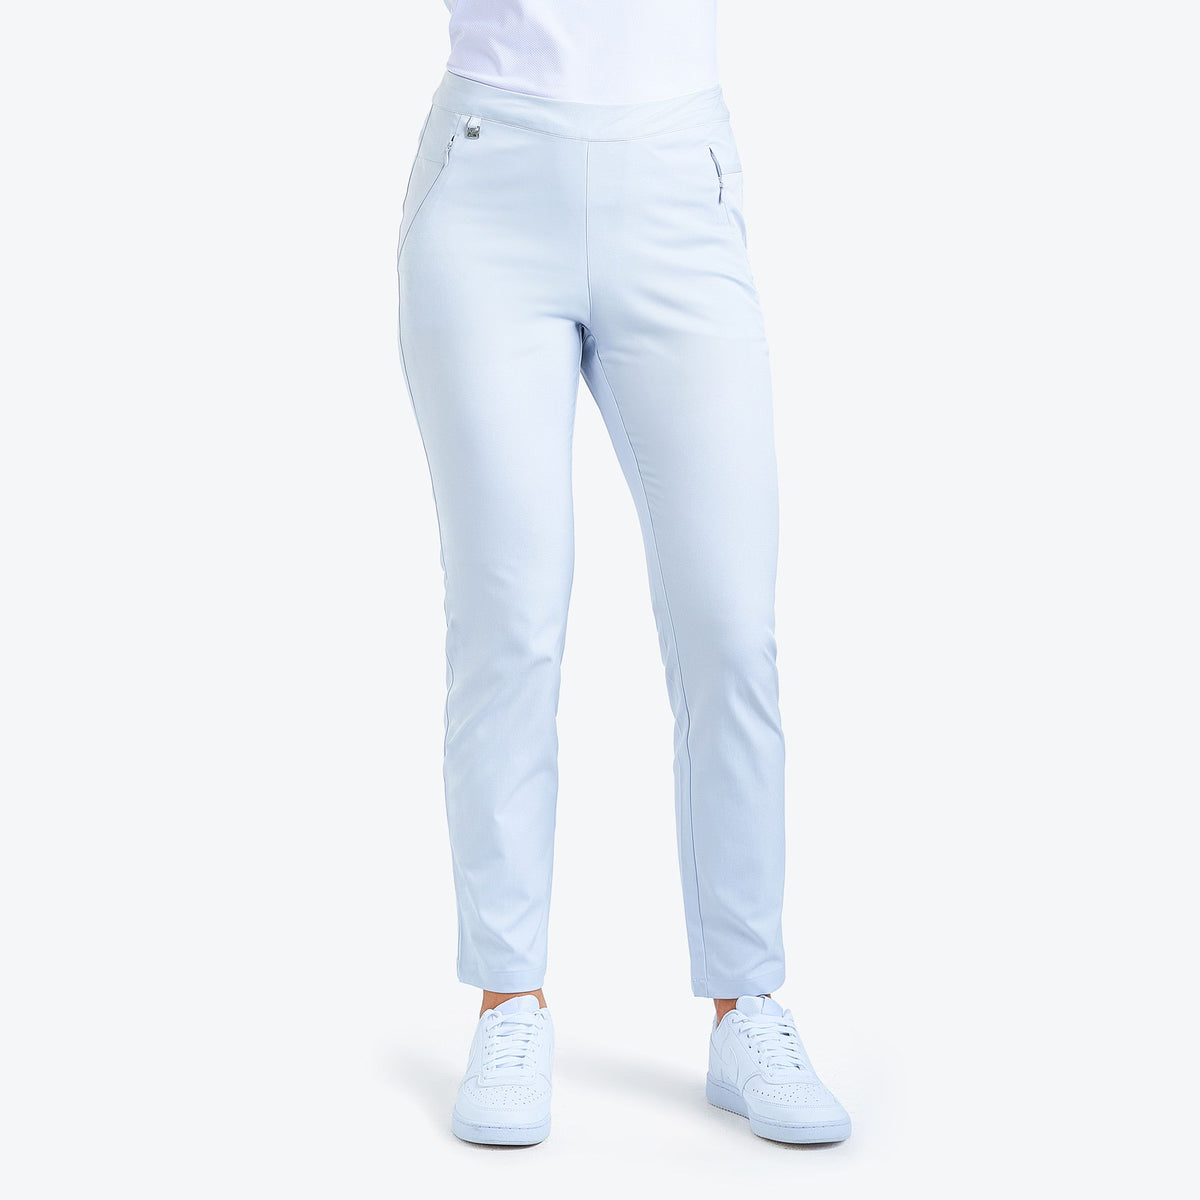 NEW Nivo Ladies Ninette Pull On Capri Golf Pants White NI0210411